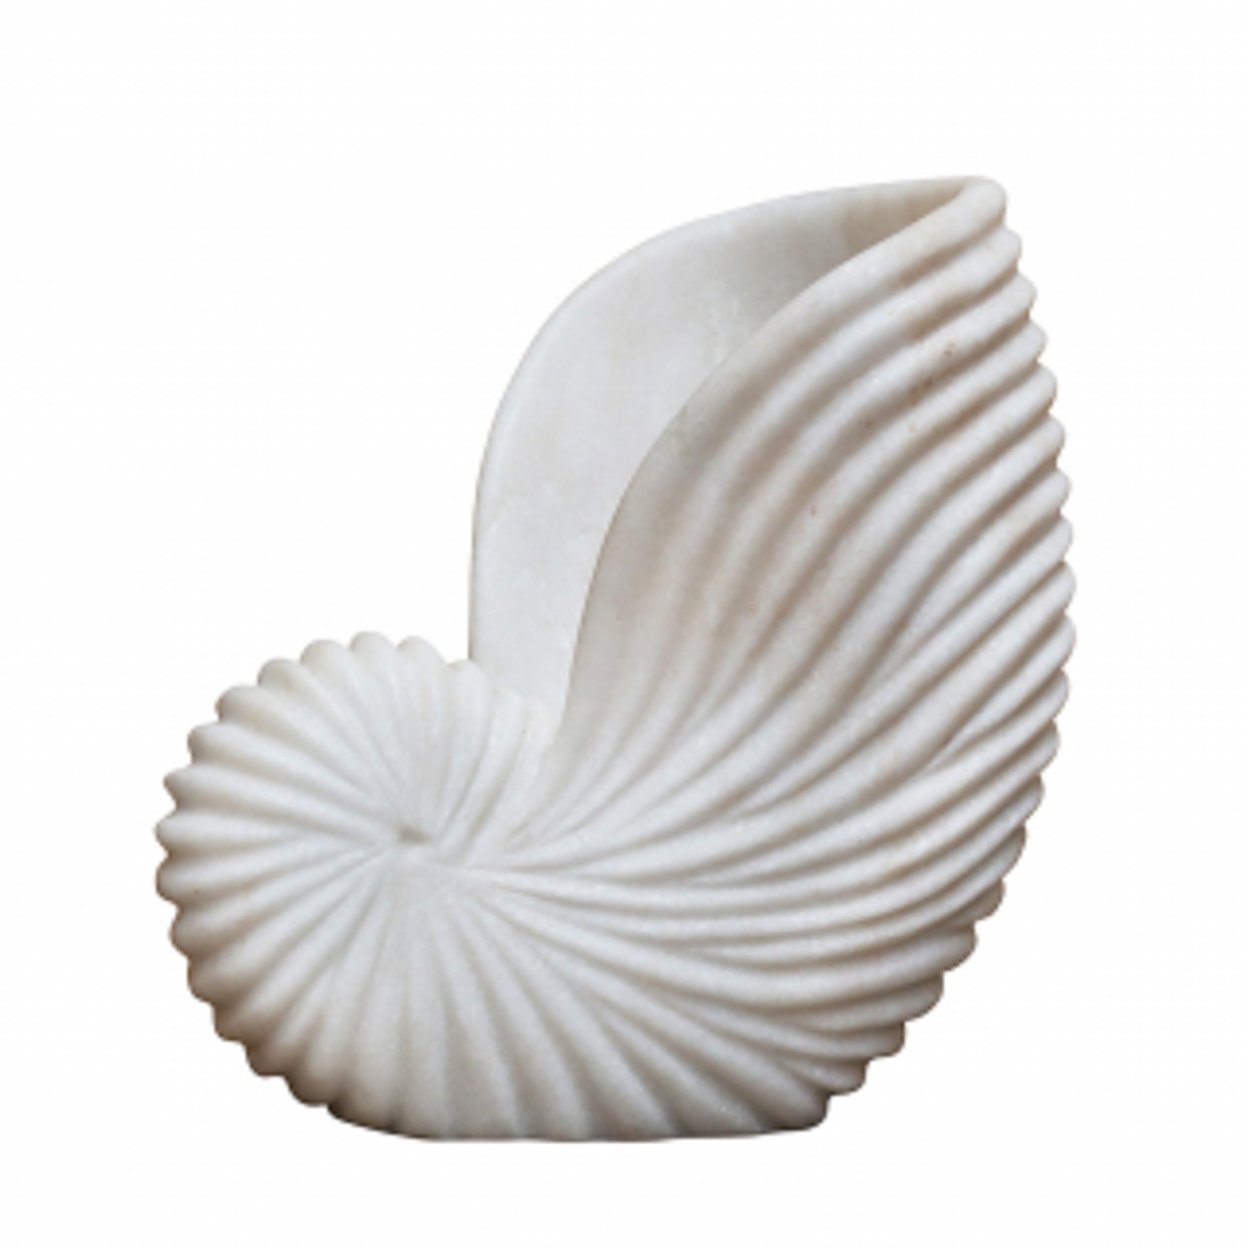 Nautilus Marble Shell - Medium